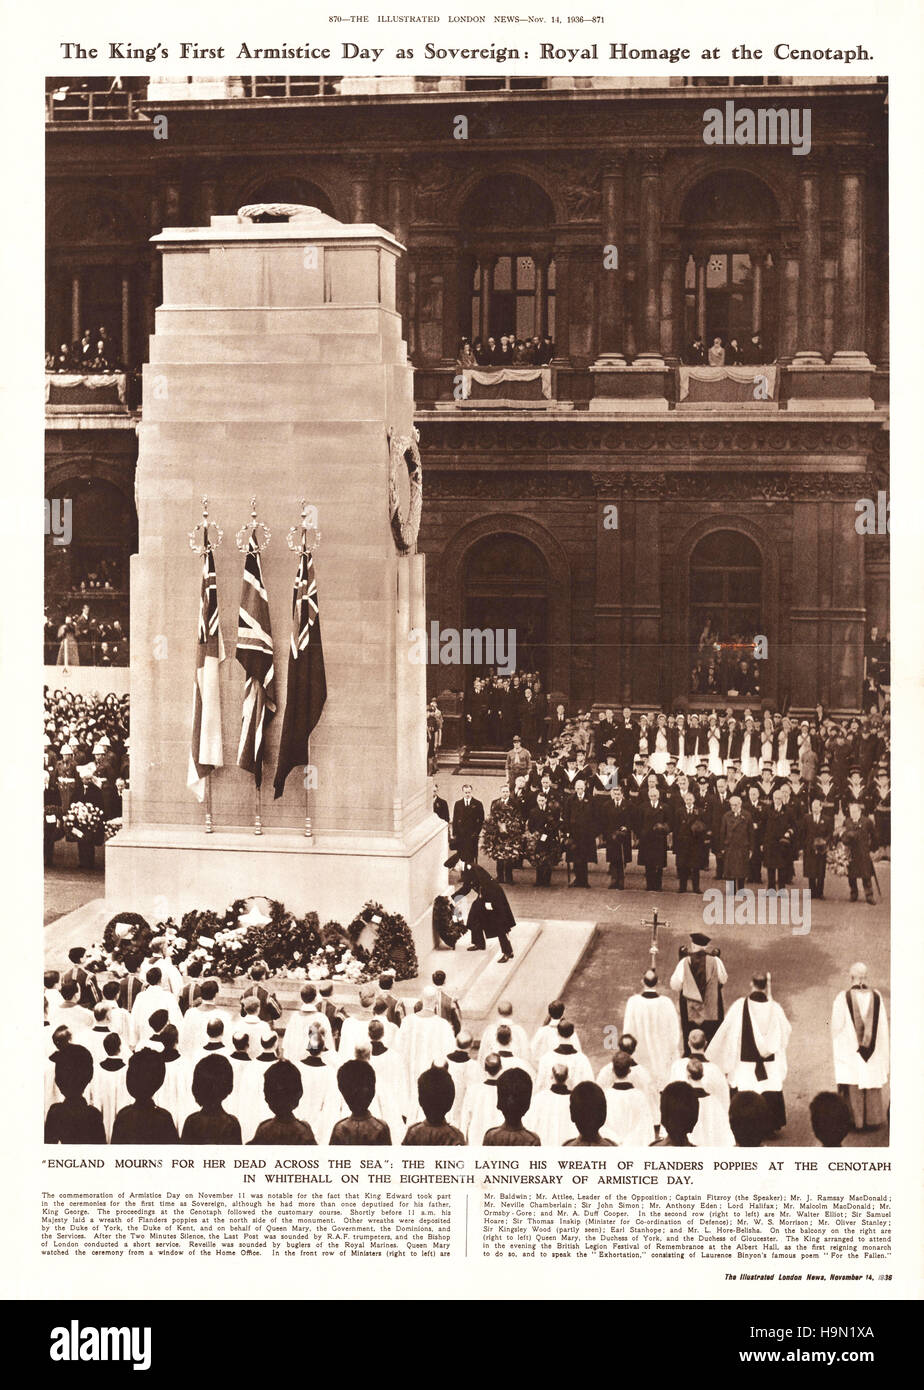 1936 illustrated London News Seite 870-871 König Edward VIII legt Kranz am Ehrenmal Stockfoto